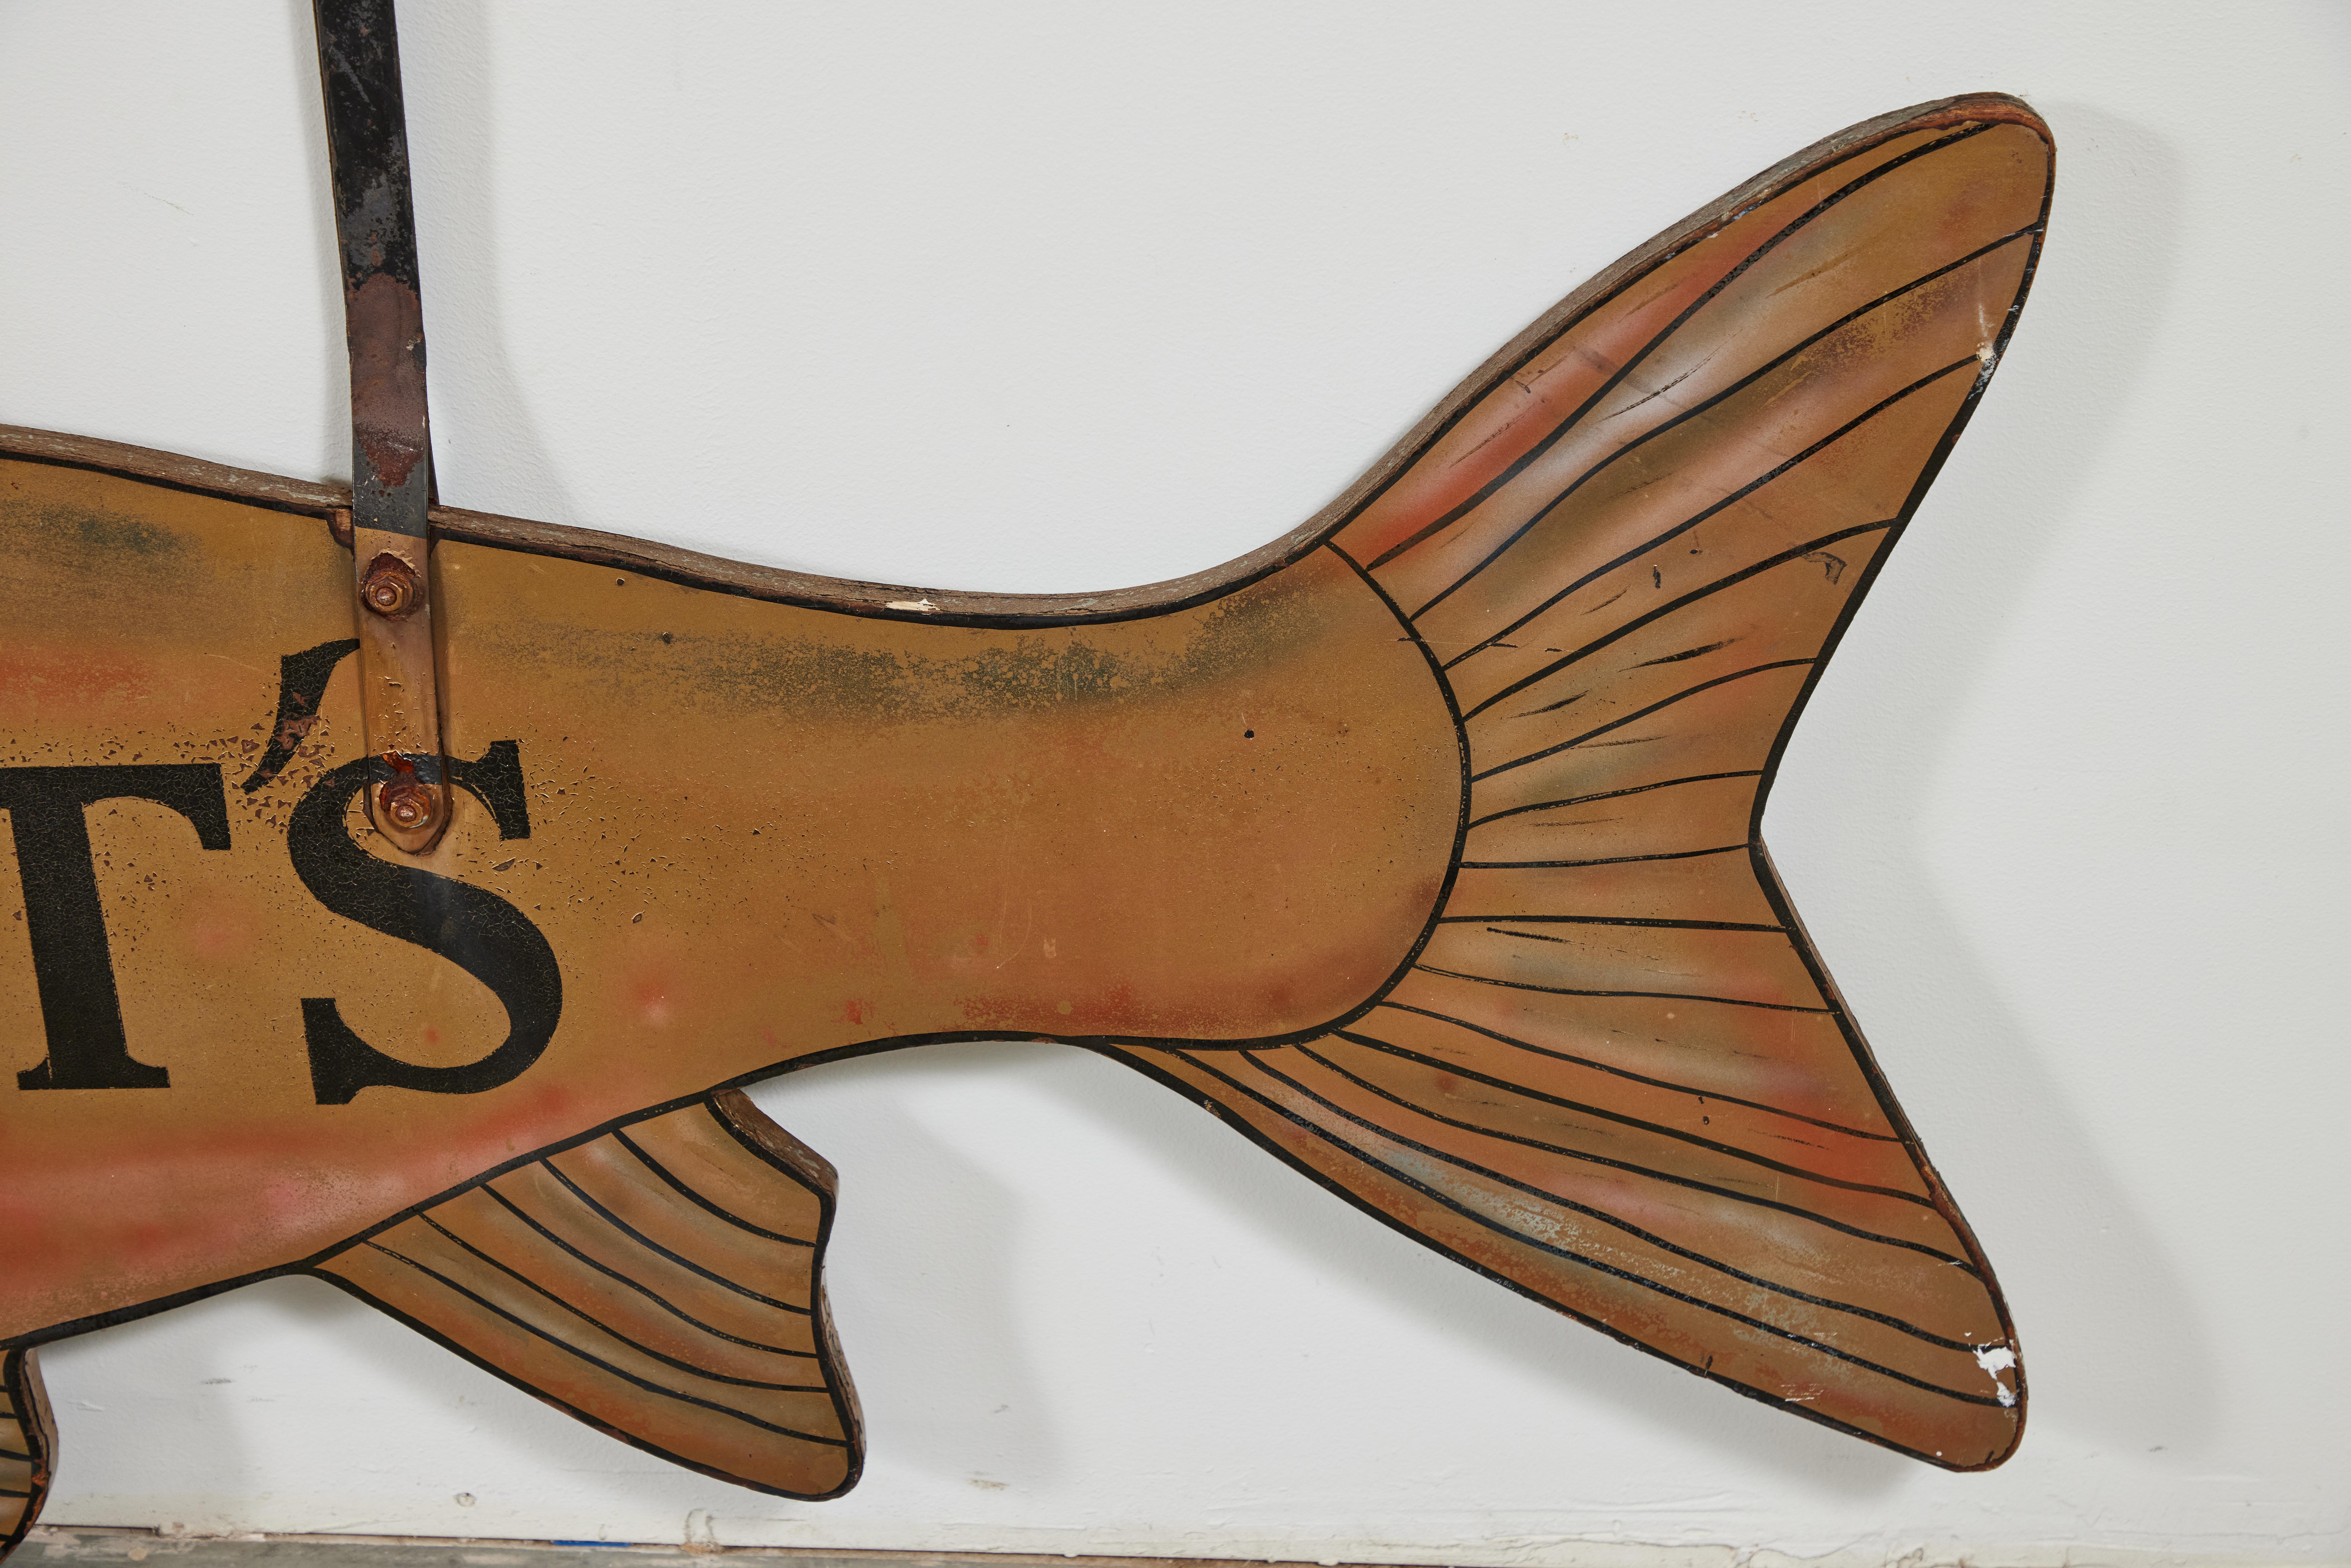 Hand-Painted Vintage Big Fish Wood Trade Sign